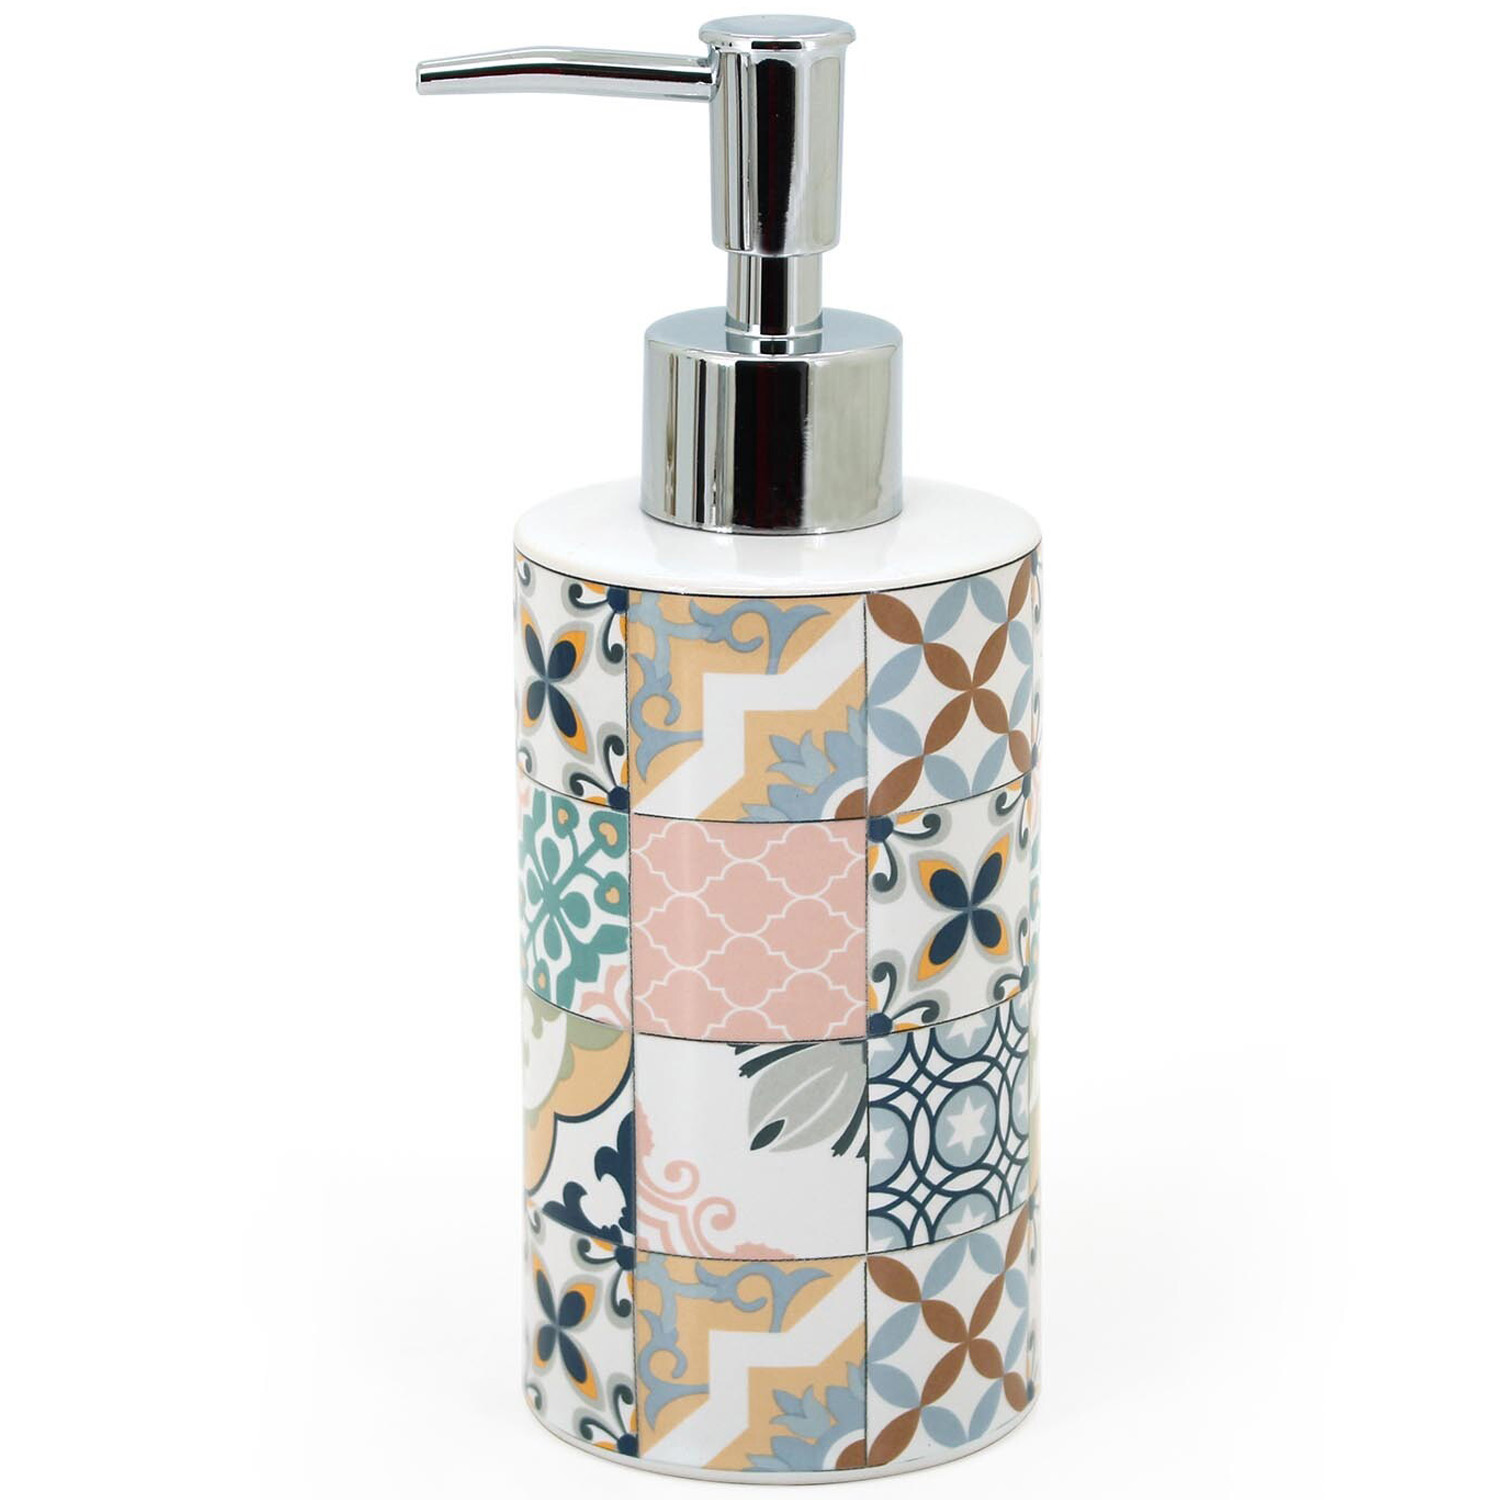 Pastel Mosaic Soap Dispenser Image